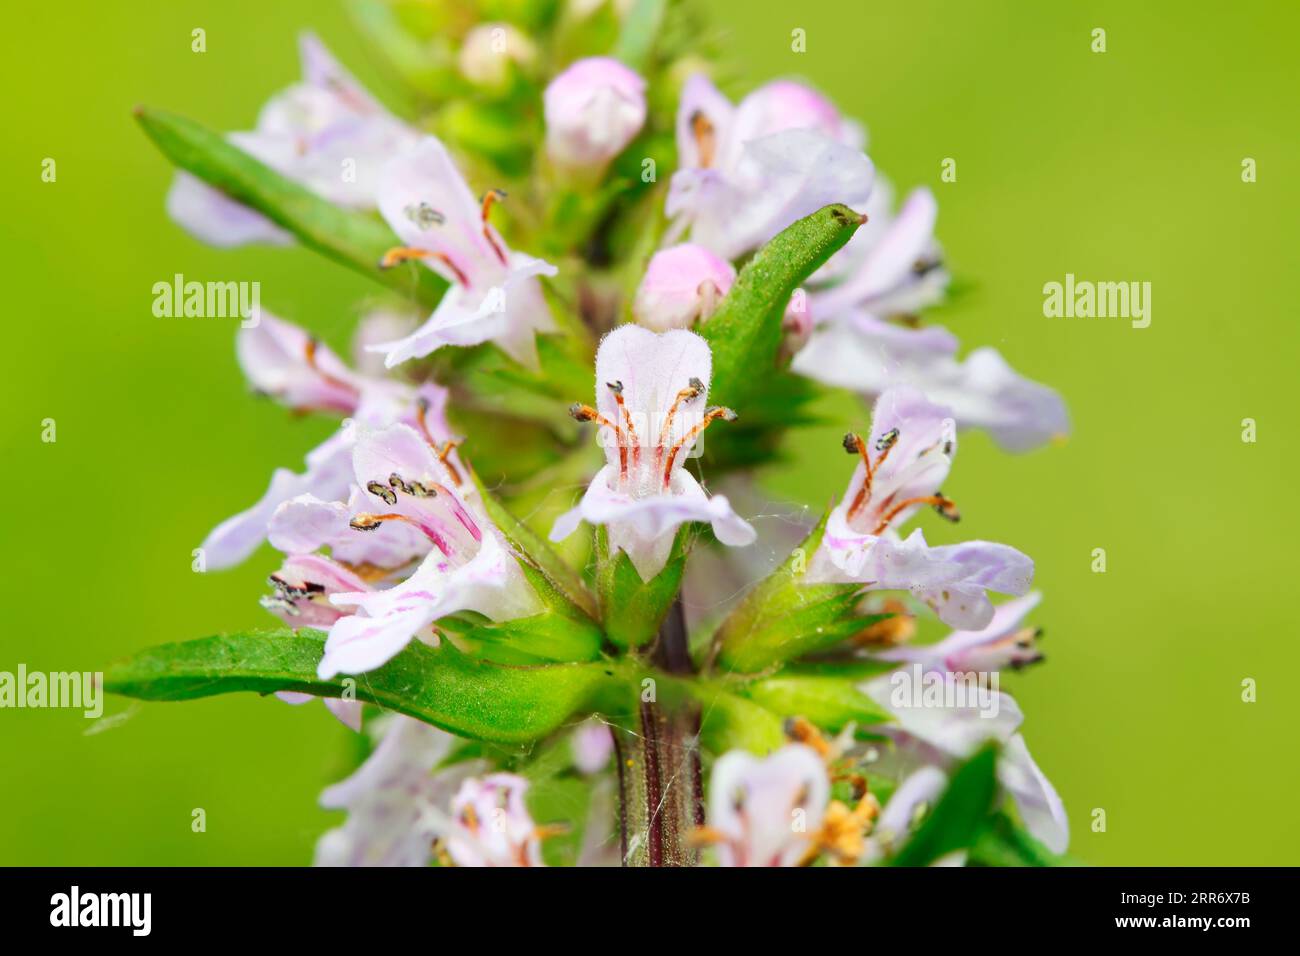 Leonurus artemisia on plant in the wild Stock Photo